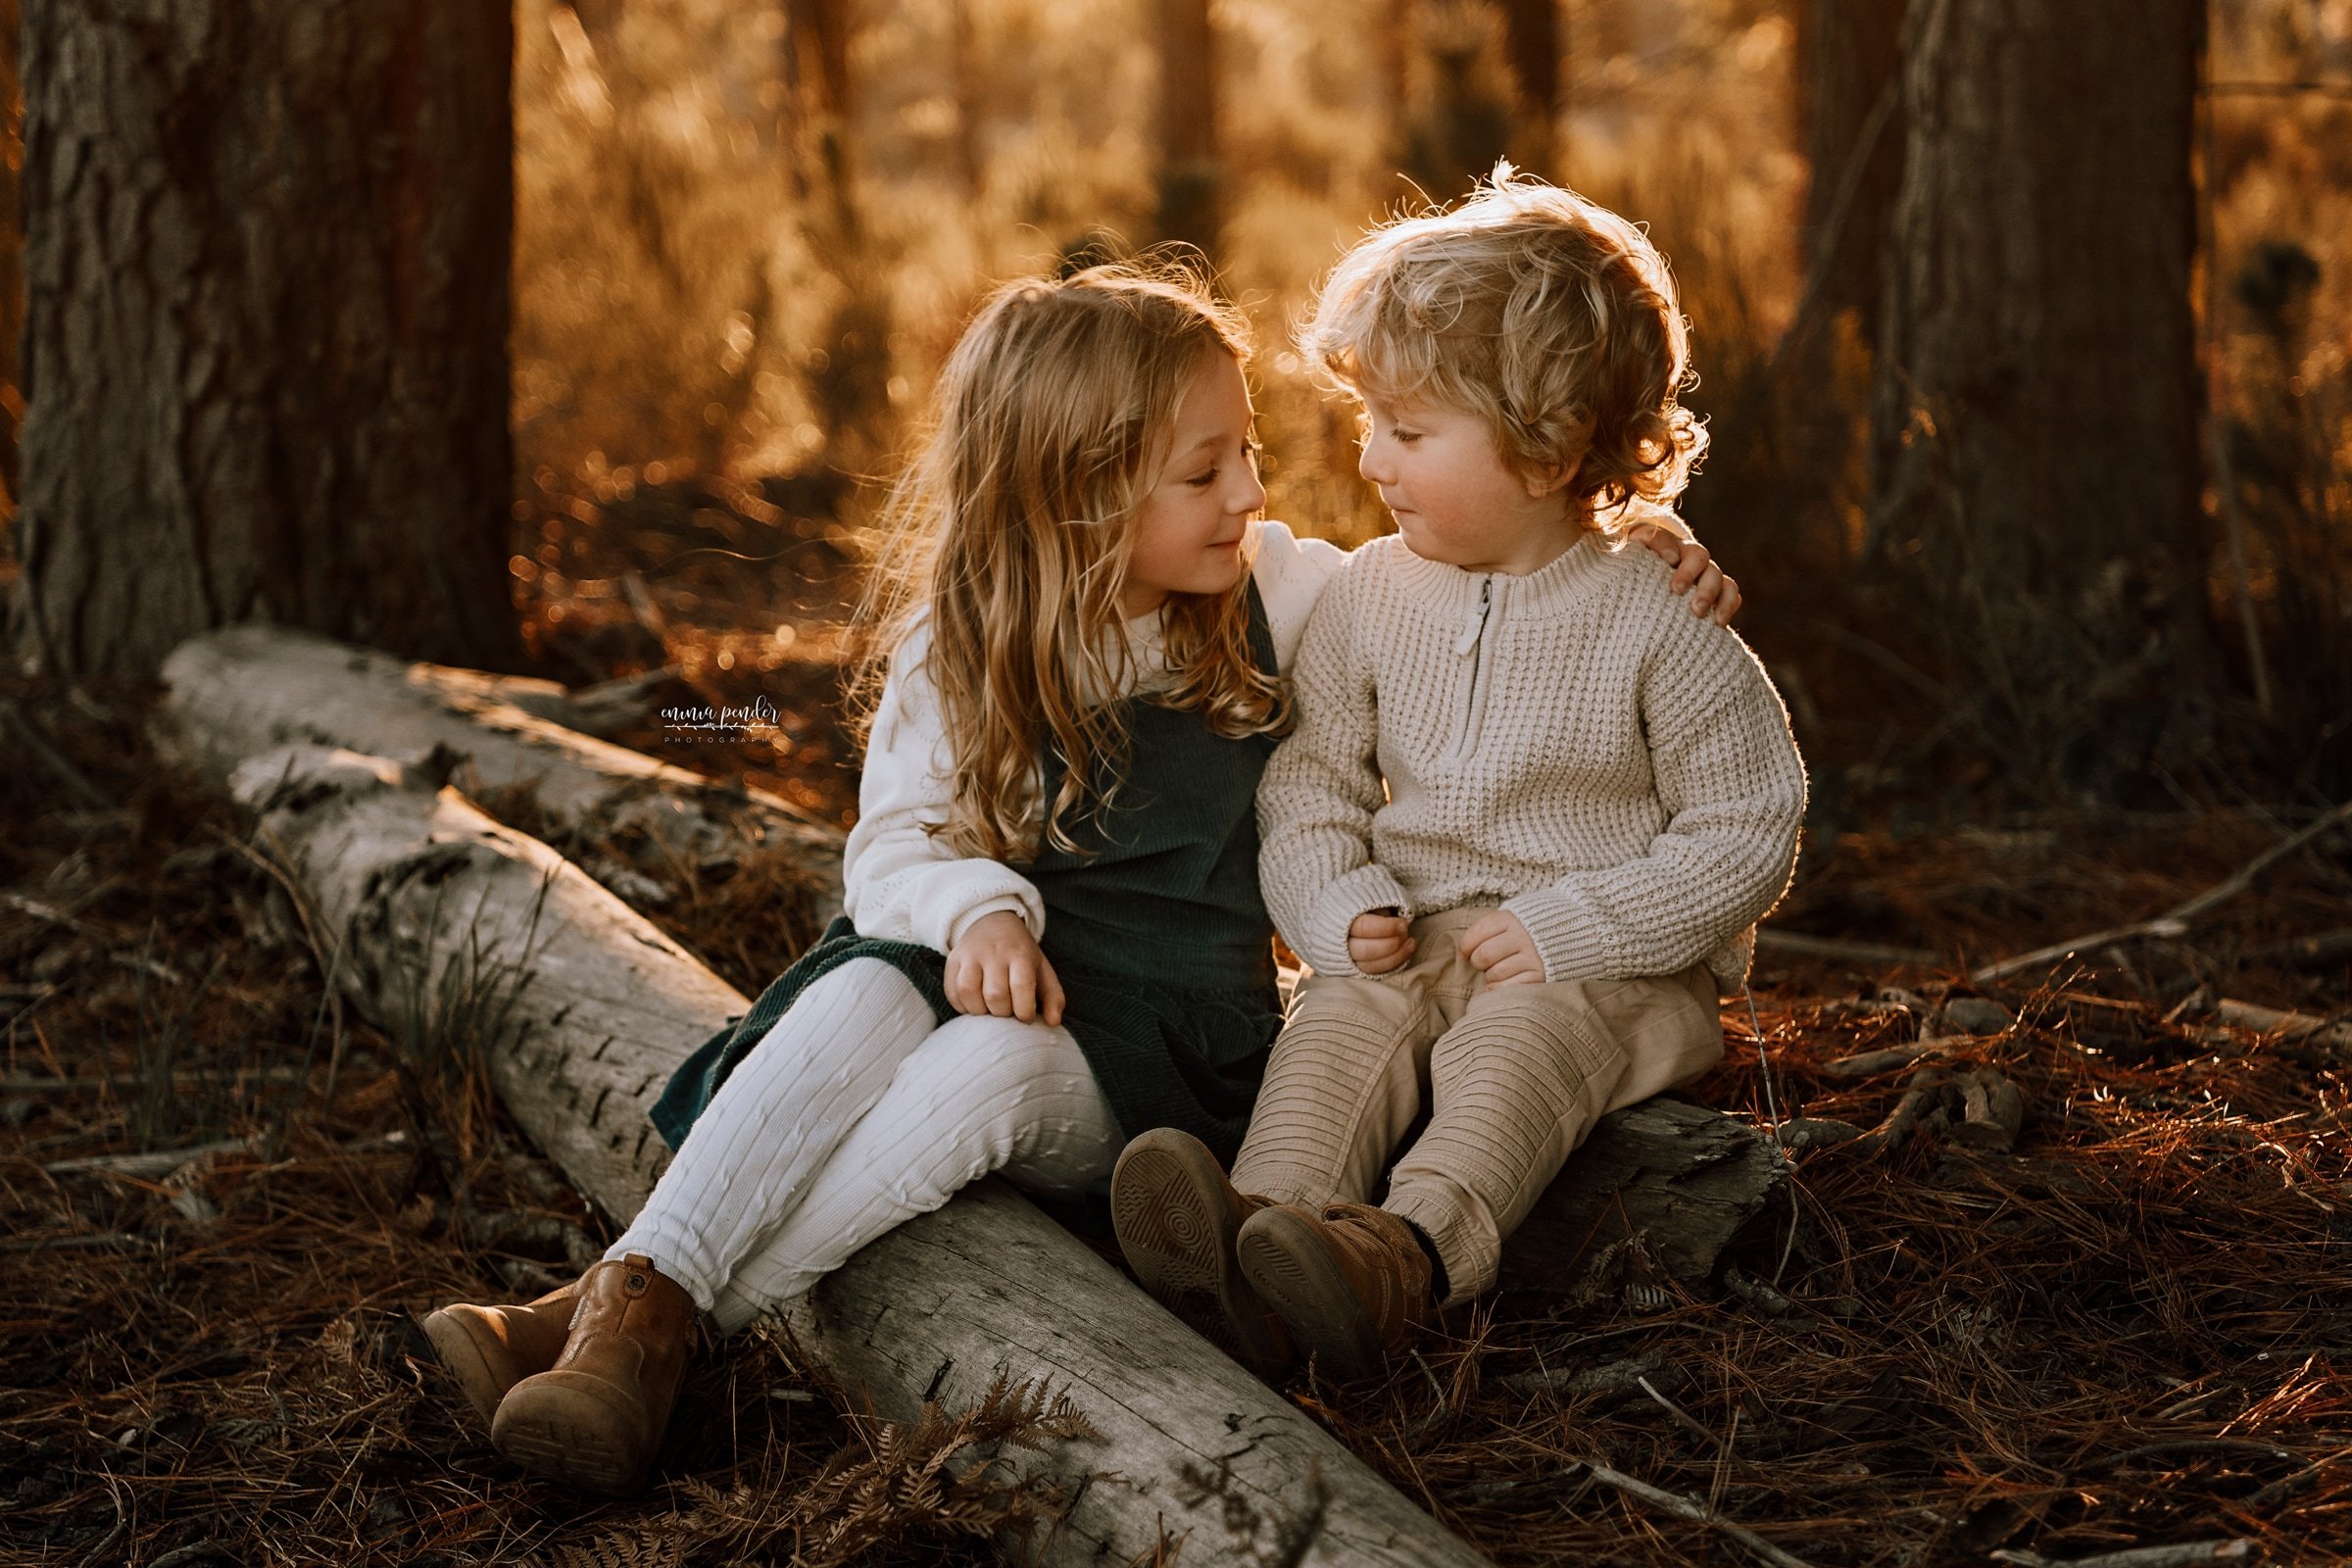 Melbourne Family Photographer | Emma Pender Photography 